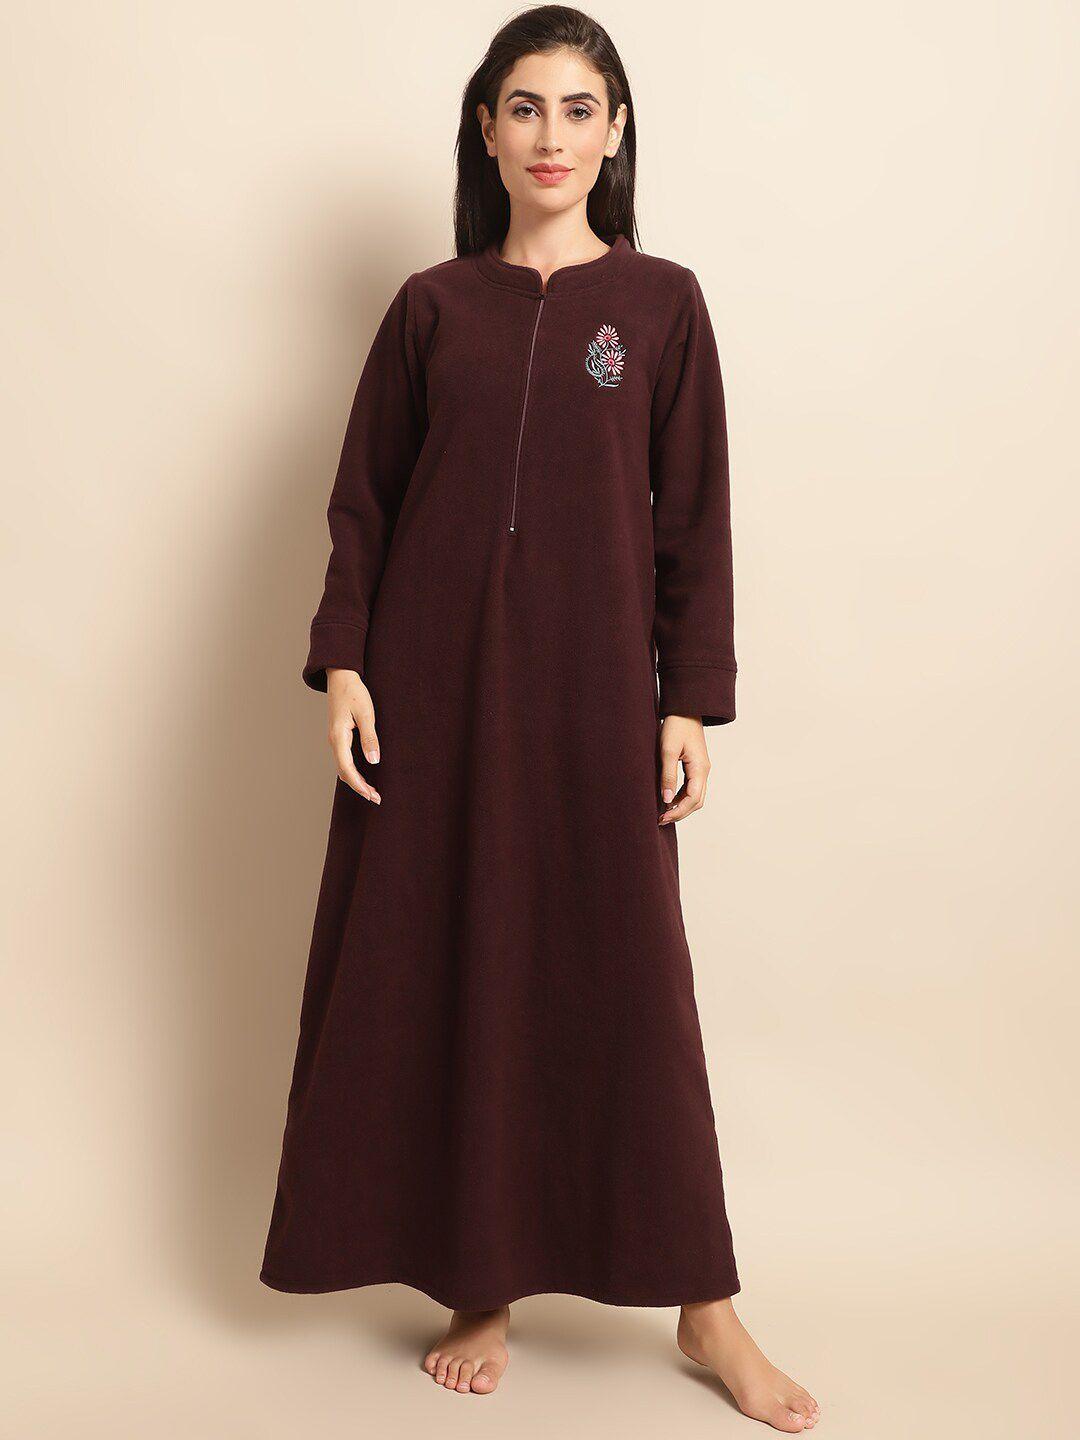 kanvin maroon embroidered fleece maxi nightdress